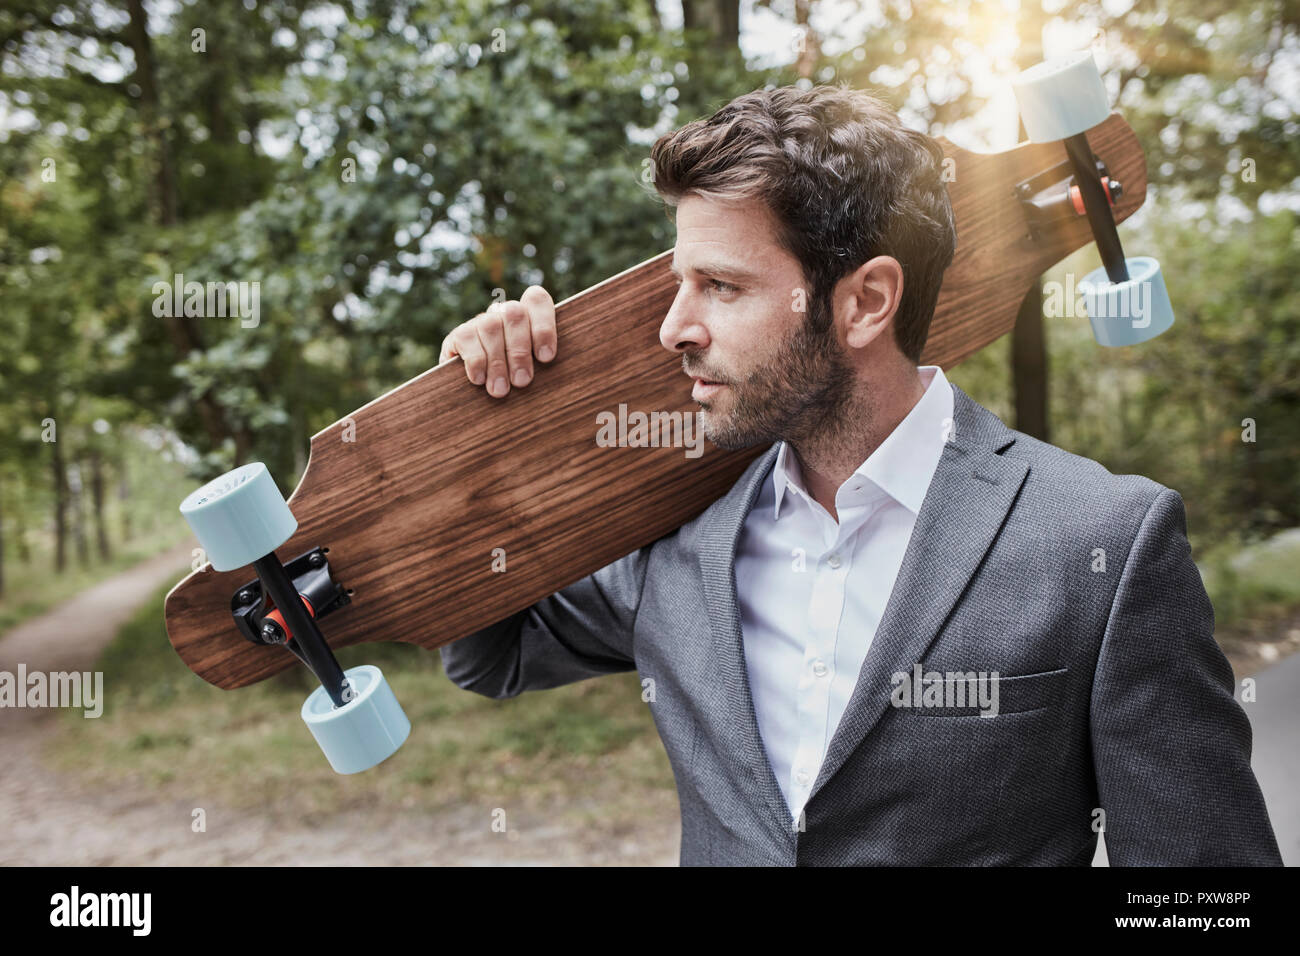 Portrait of businessman carrying skateboard on rural road Banque D'Images